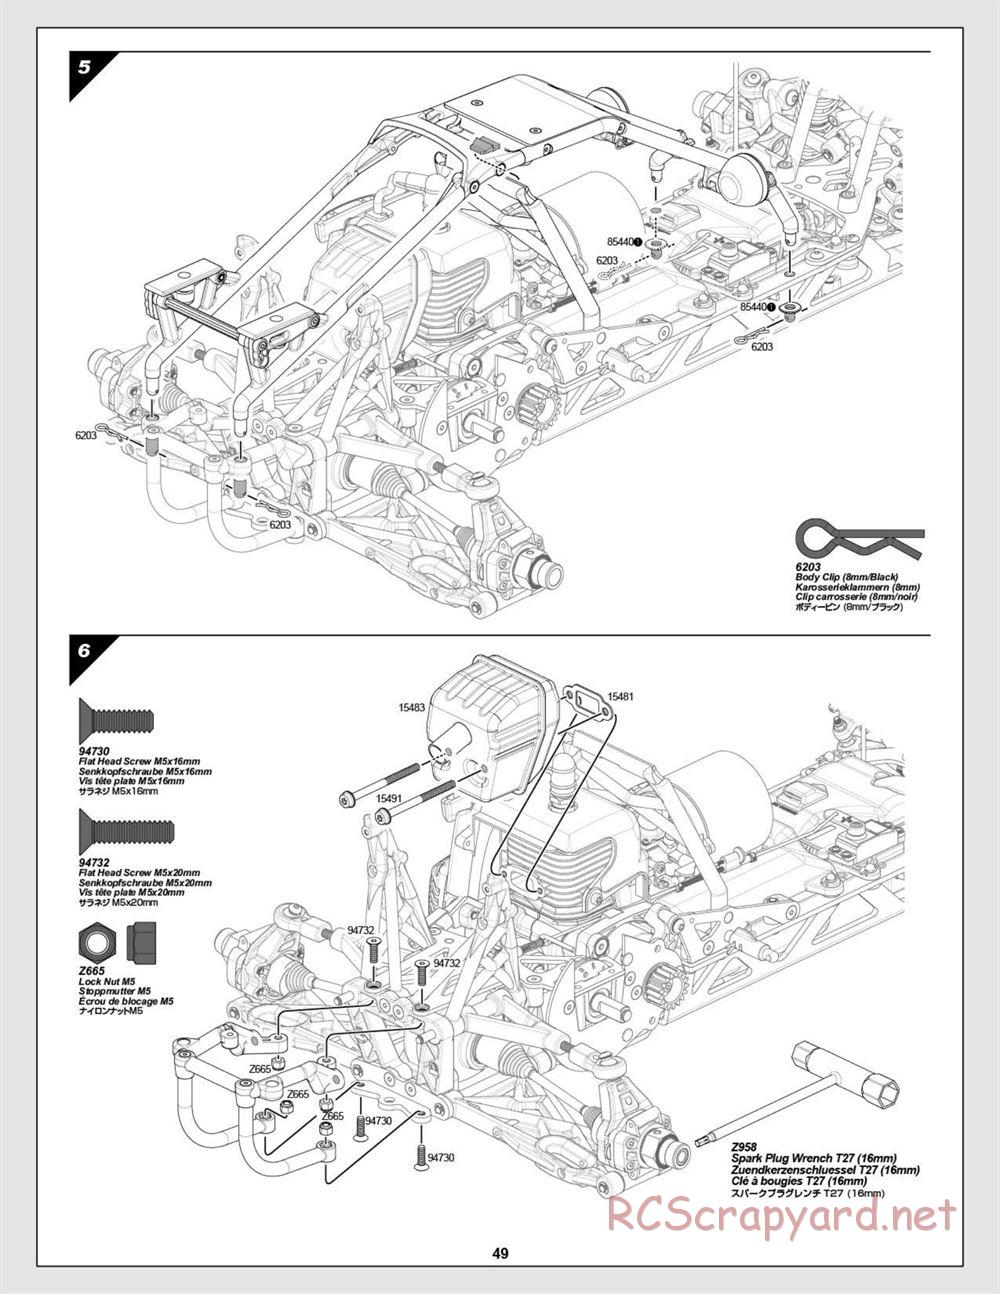 HPI - Baja 5B 2.0 RTR - Manual - Page 49